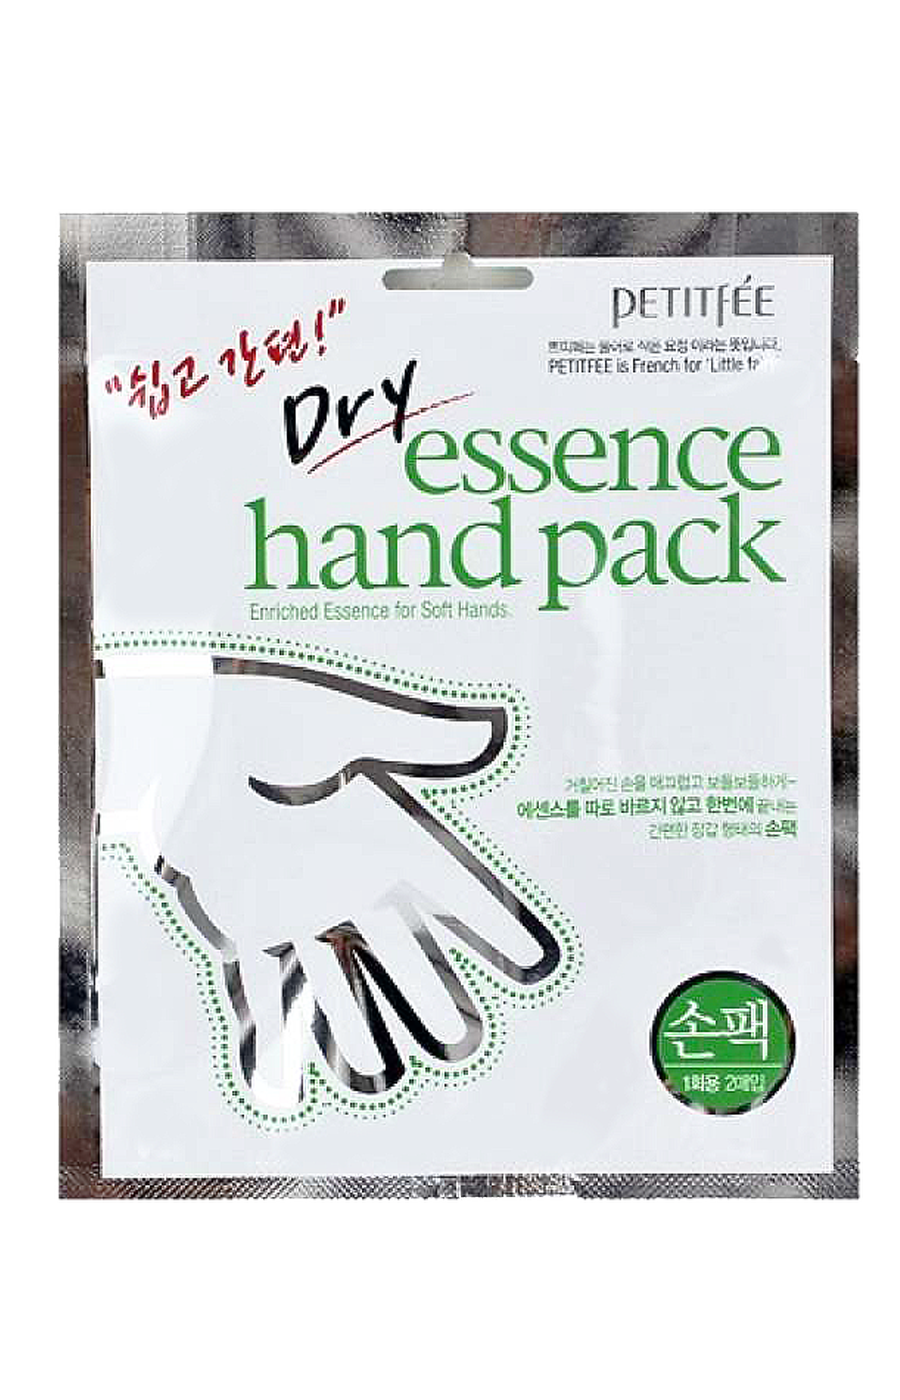 Petitfee Dry Essence Hand Pack маска-перчатки для рук с сухой эссенцией, 1шт